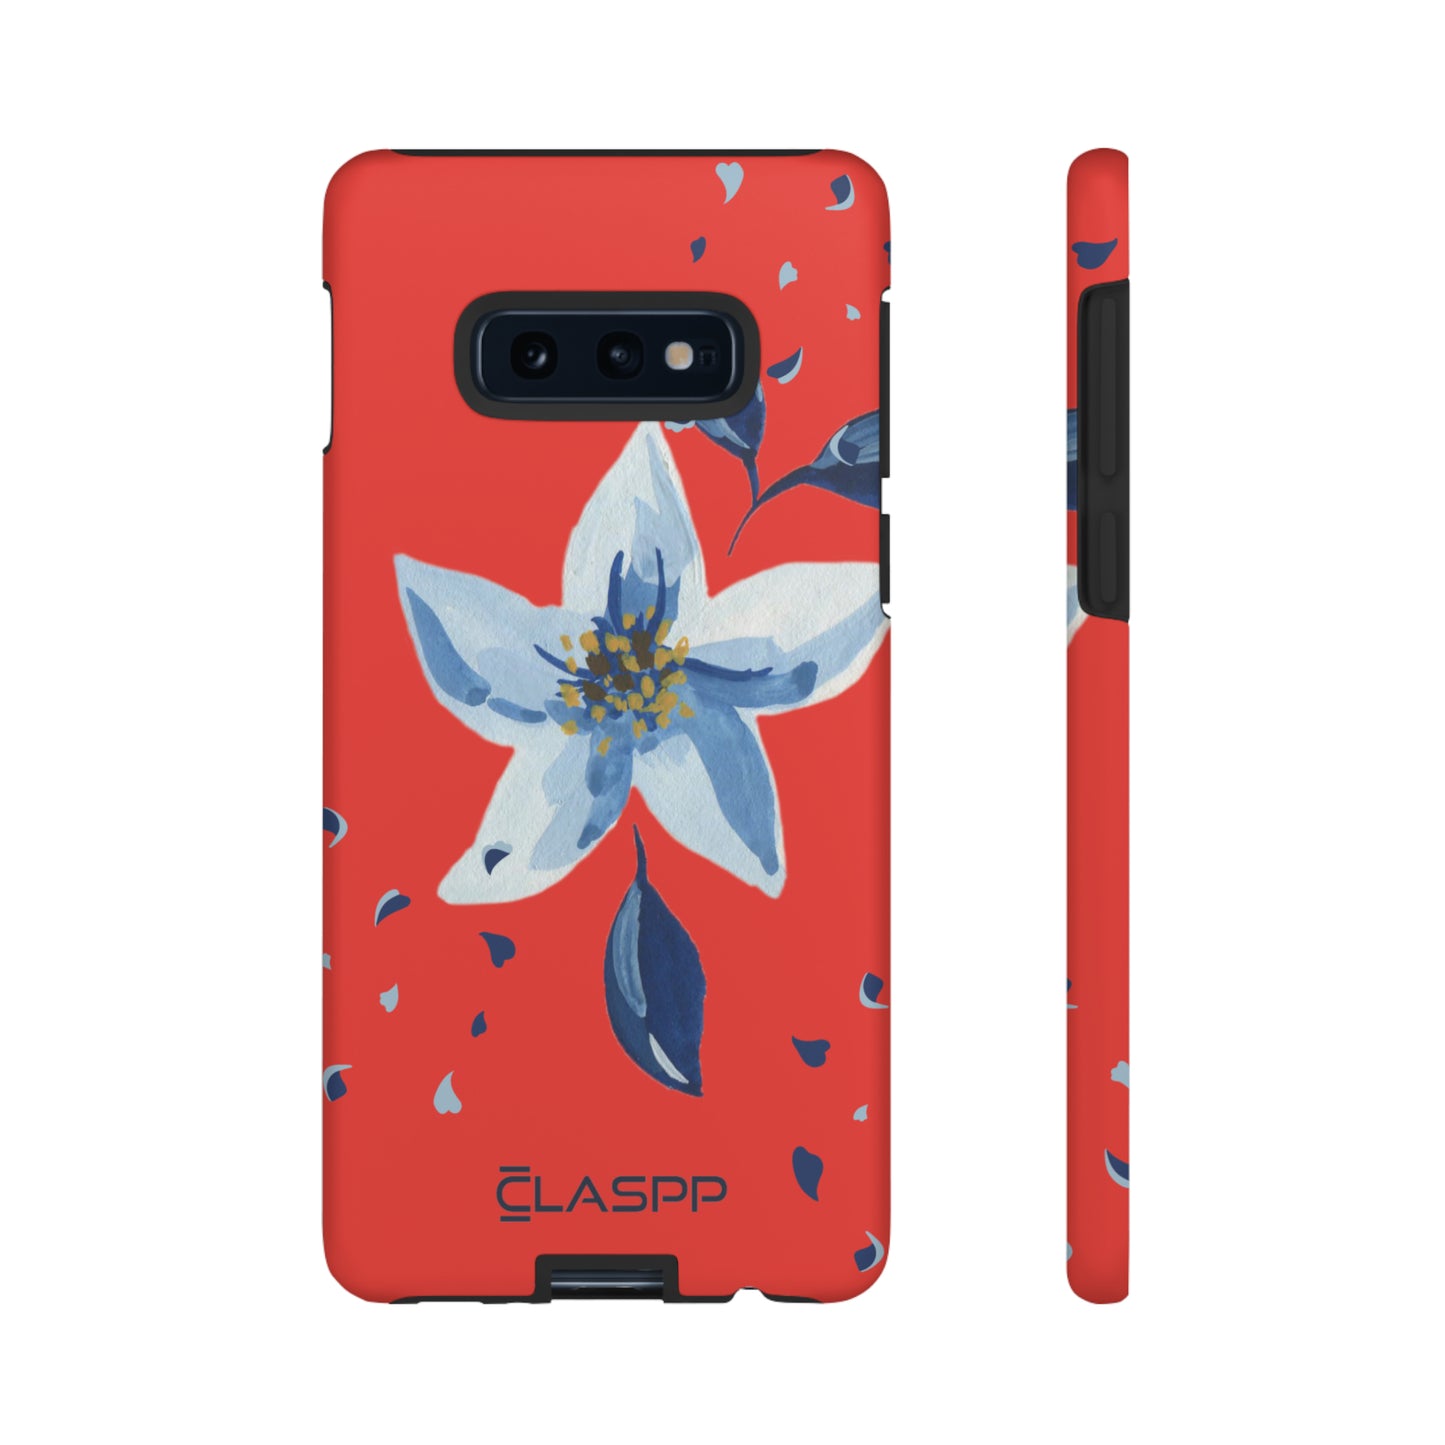 Flor Blanca | Hardshell Dual Layer Phone Case